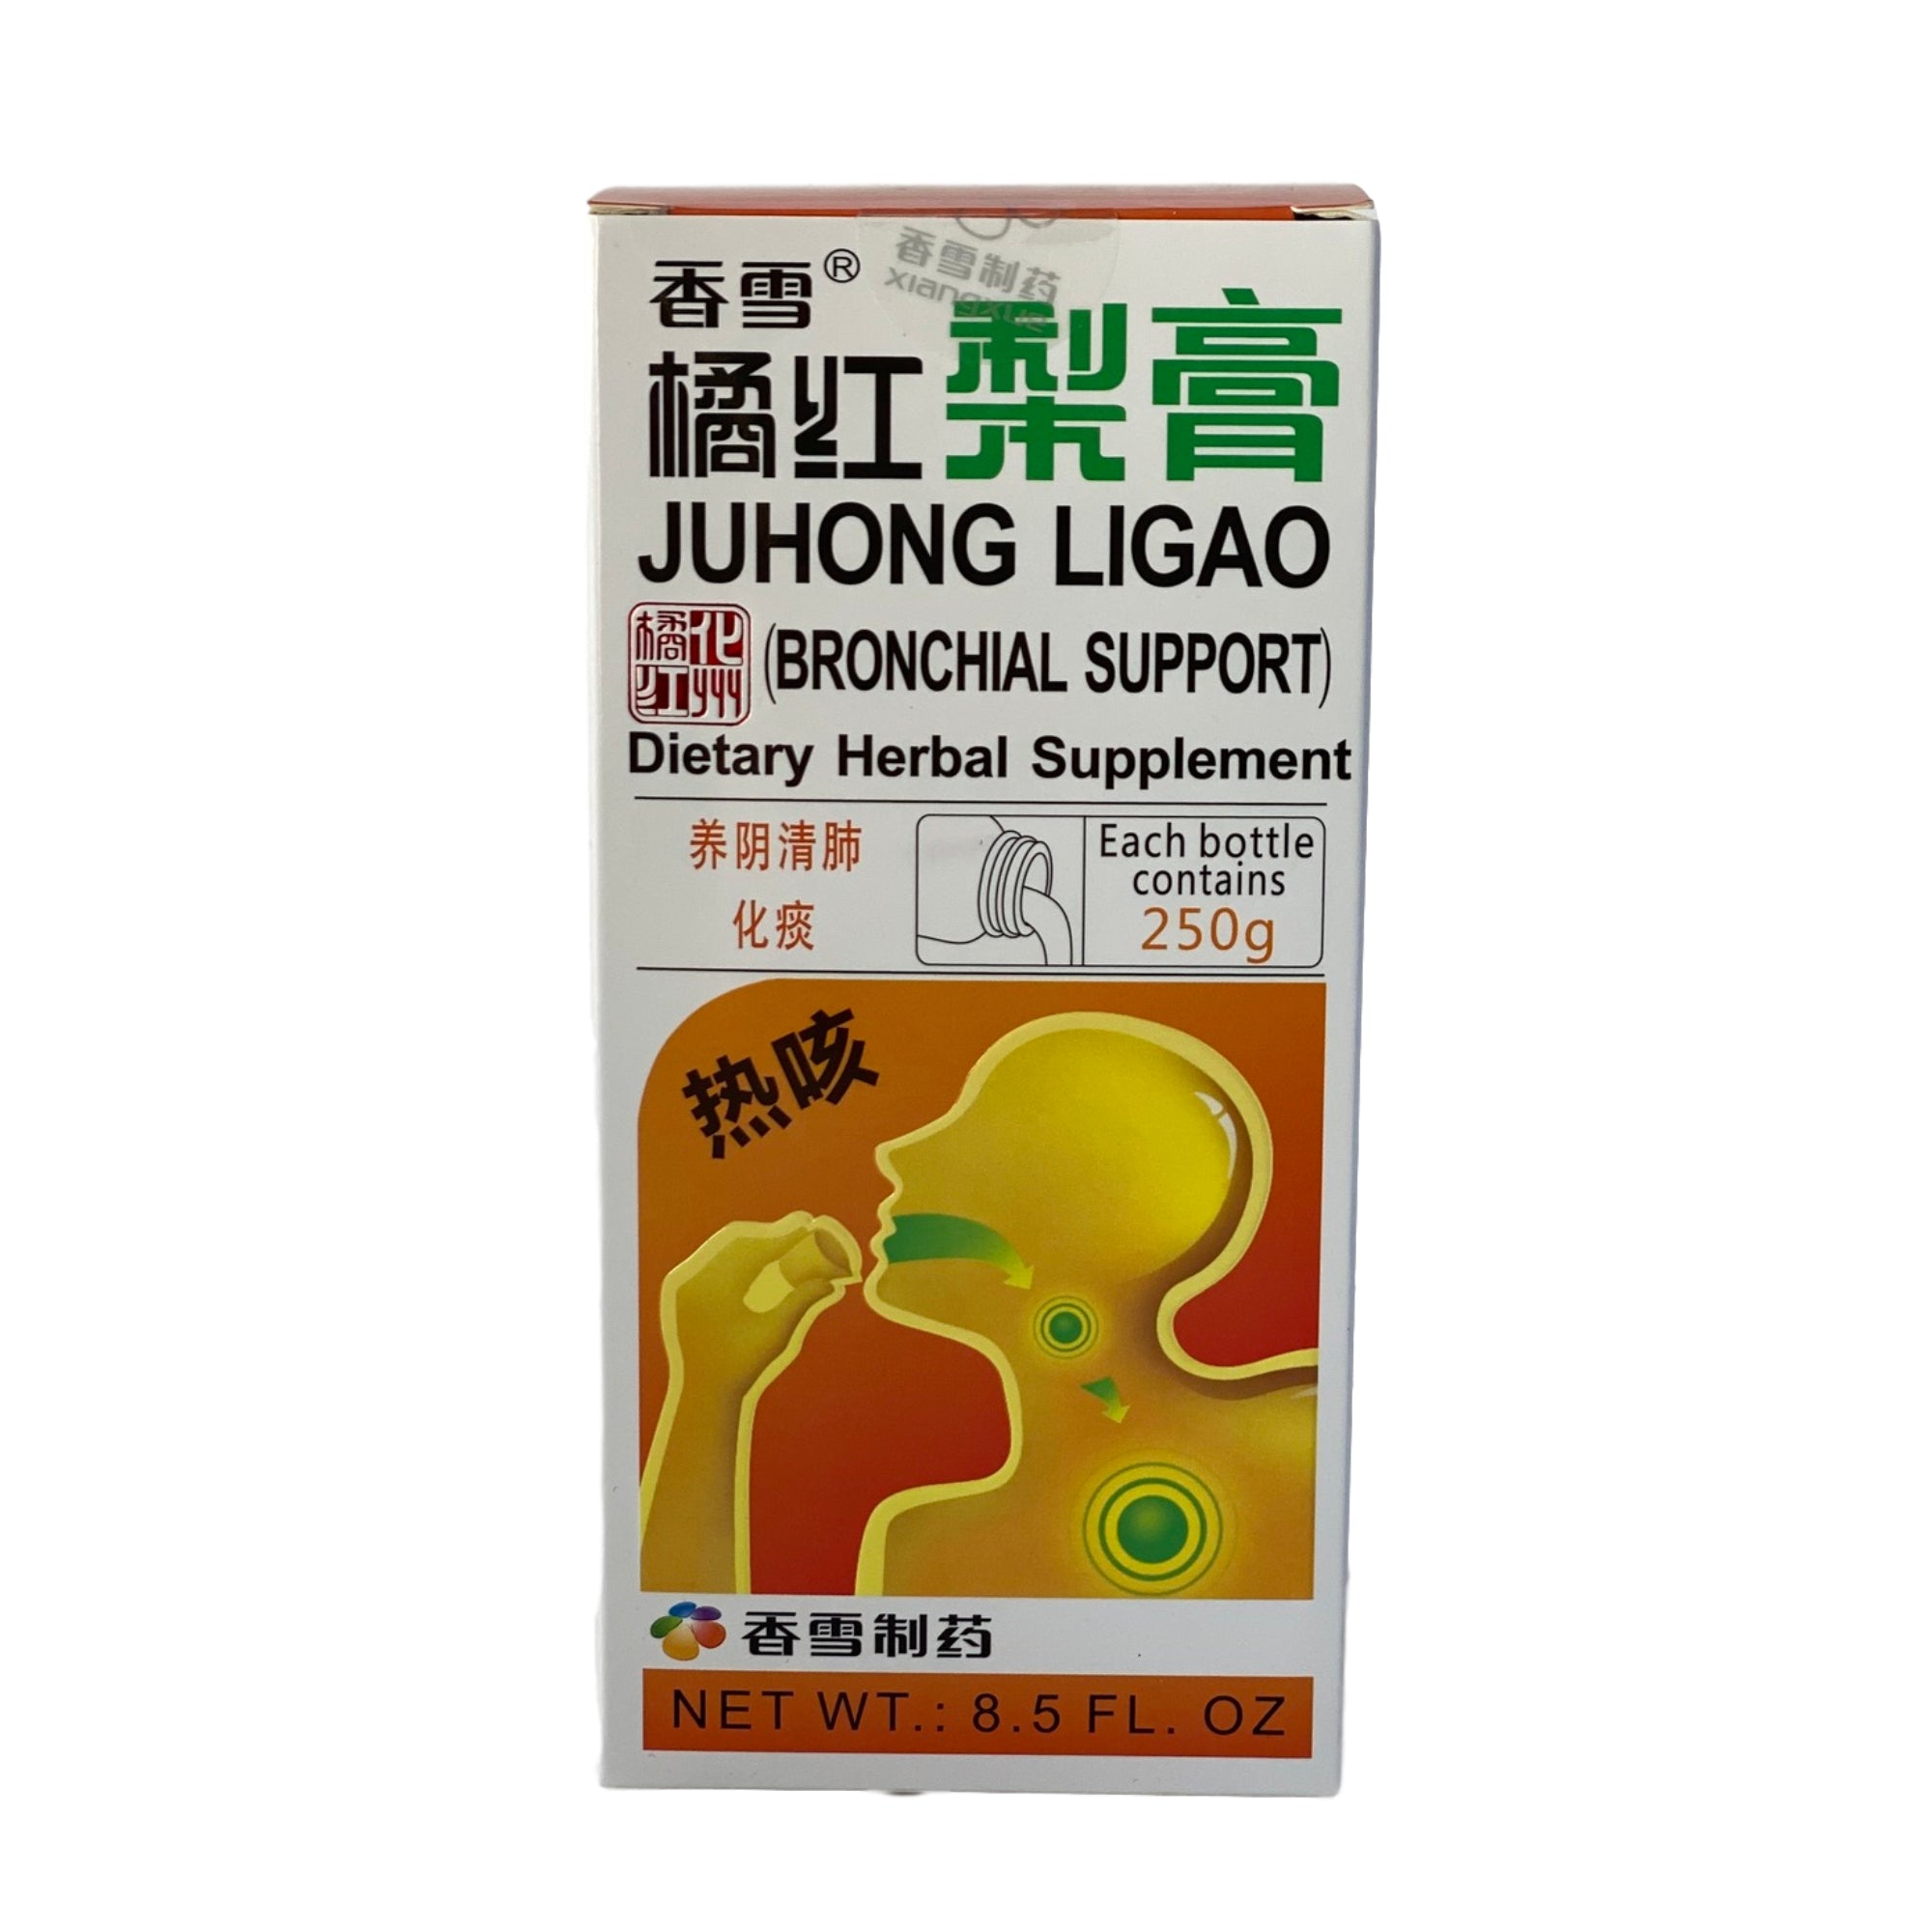 JUHONG LIGAO BRONCHIAL SUPPORT - Herbs Depo